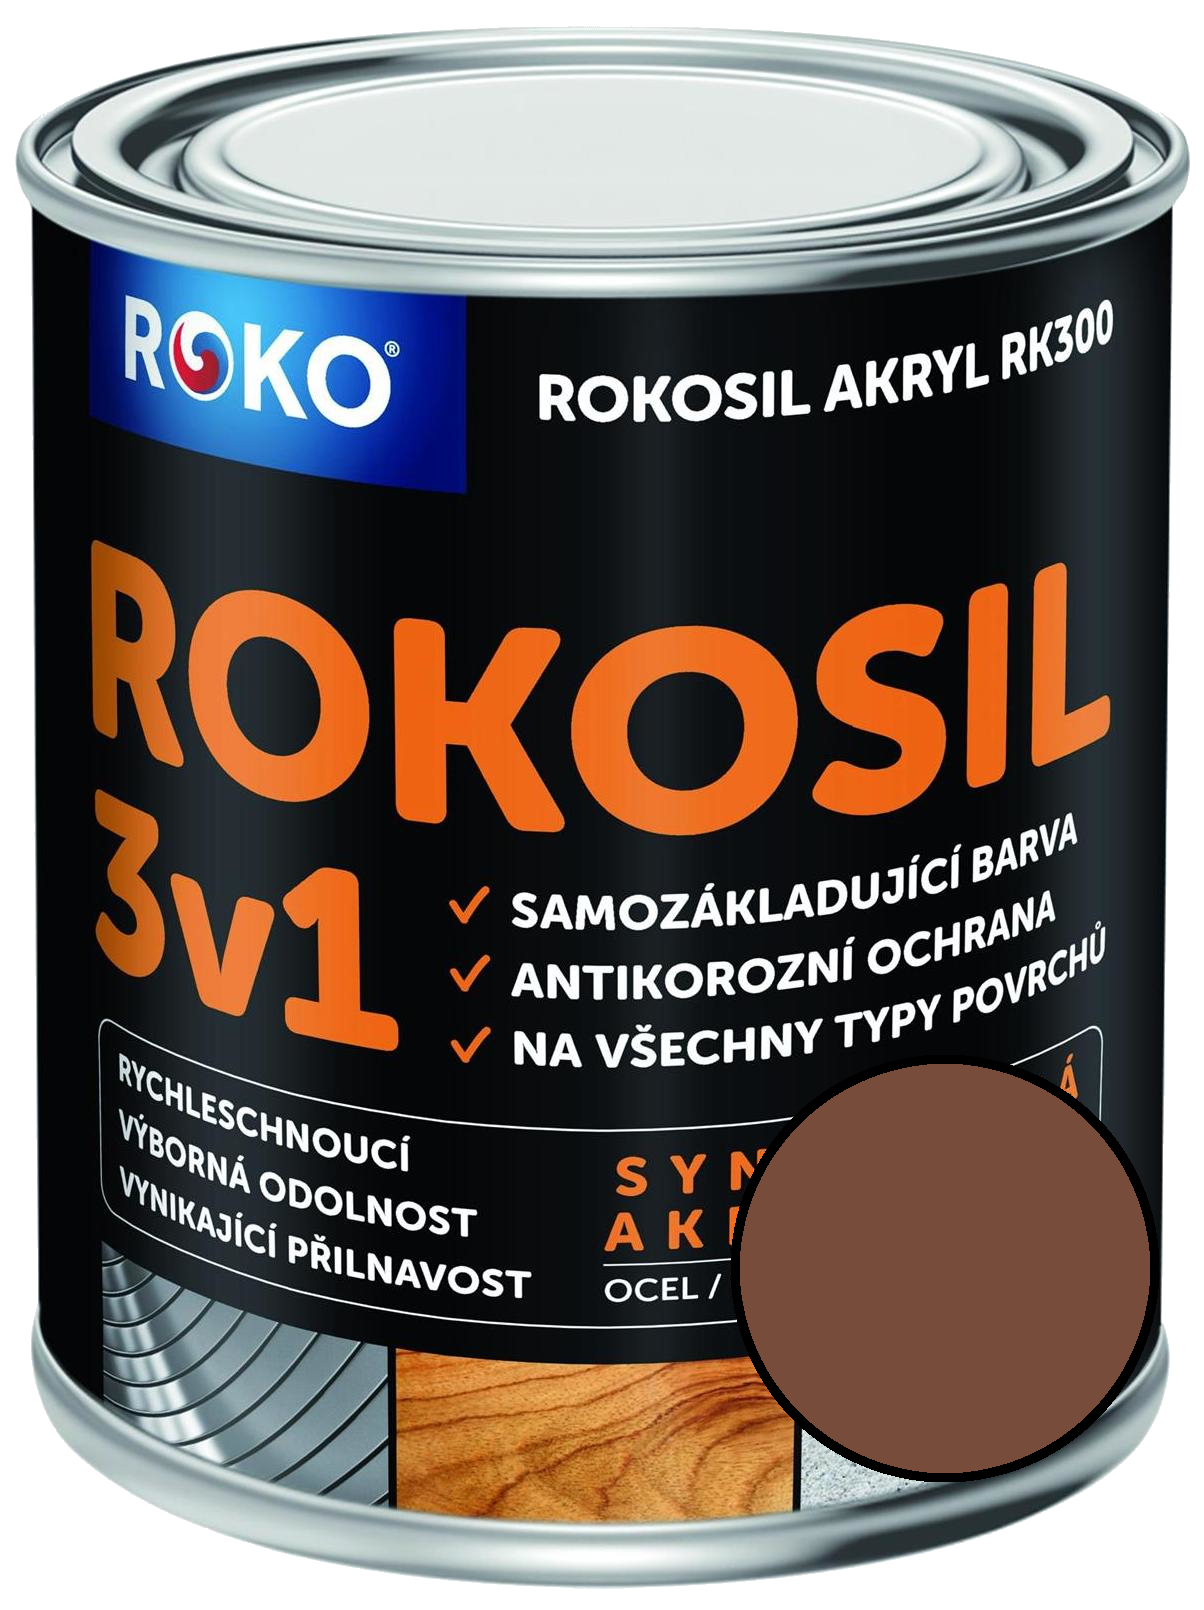 Barva samozákladující Rokosil akryl 3v1 RK 300 2320 hnedá světlá, 3 l